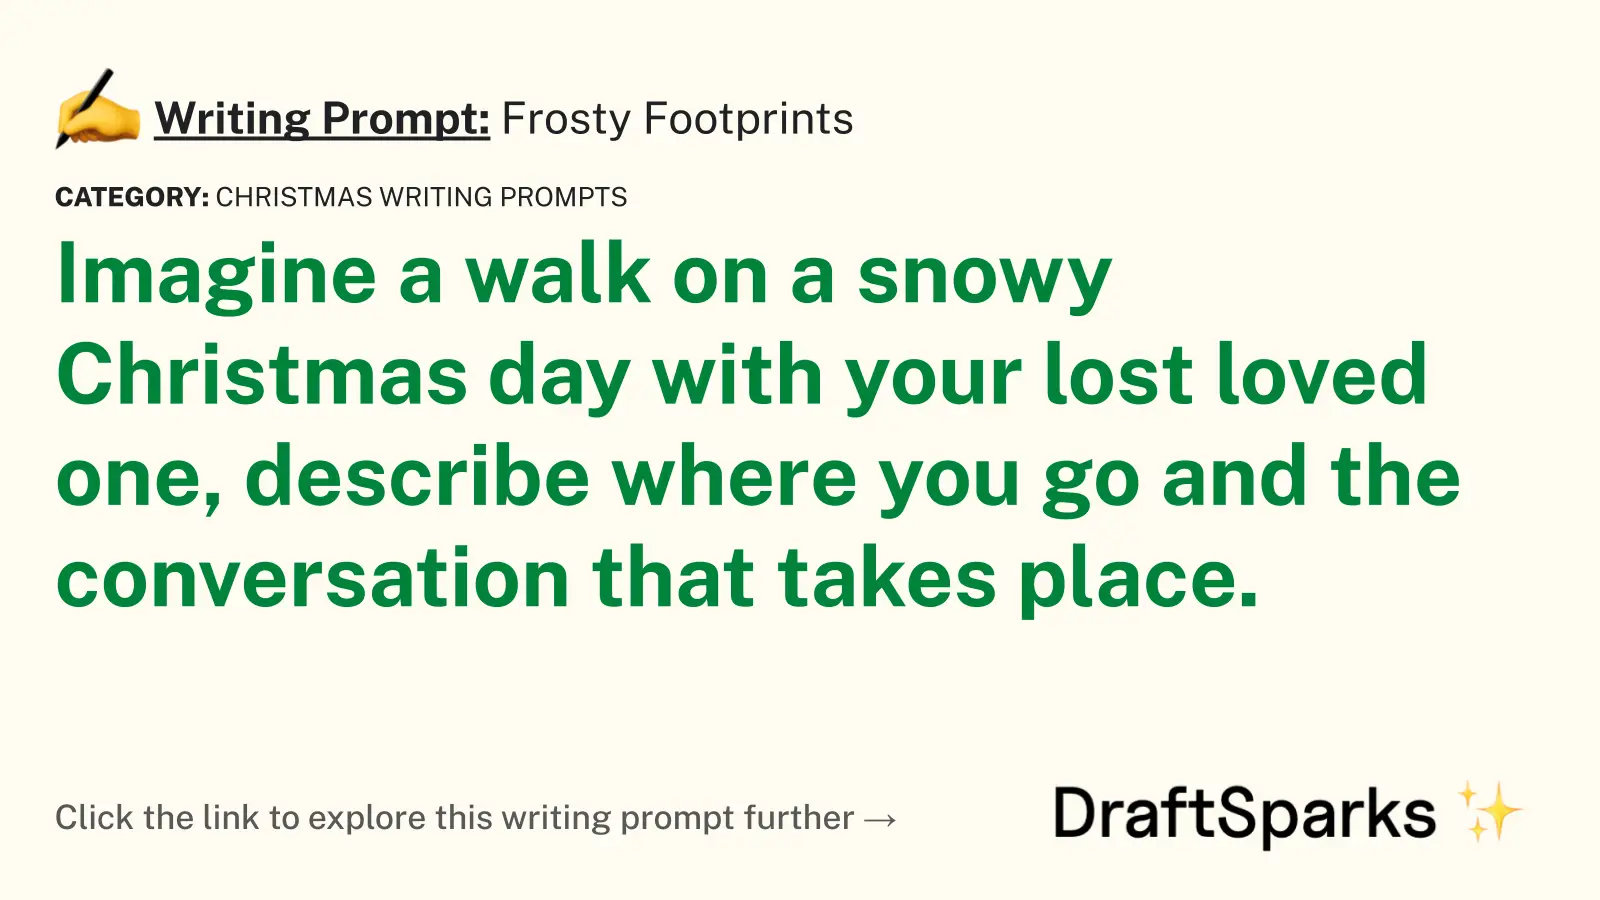 Frosty Footprints